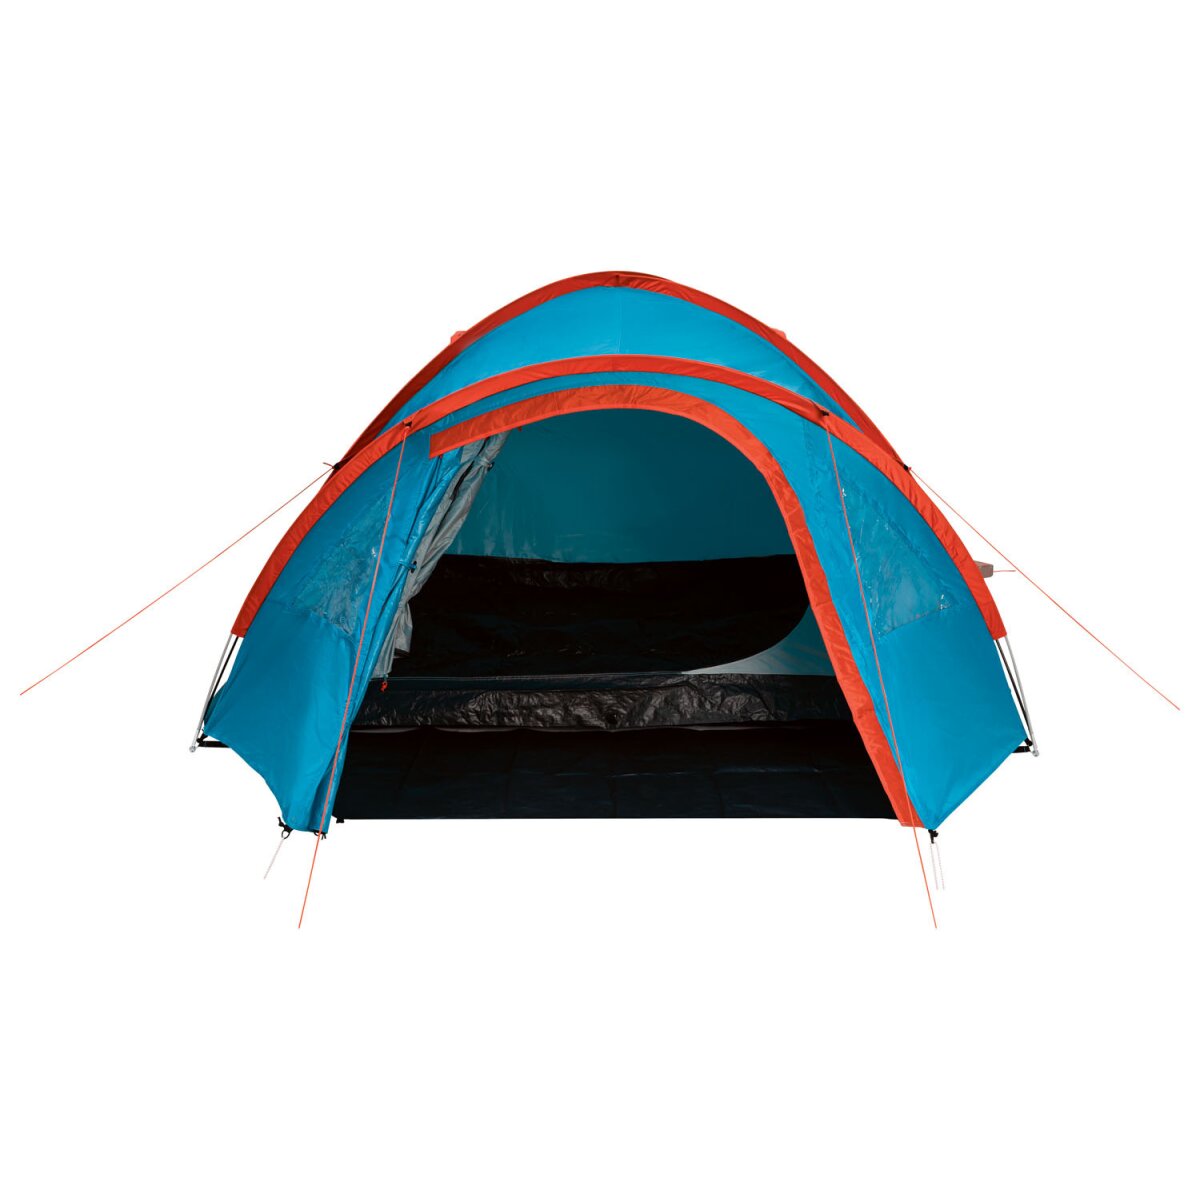 Rocktrail Campingzelt, für 4 Personen, Modell 2023 - B-Ware, 55,99 €